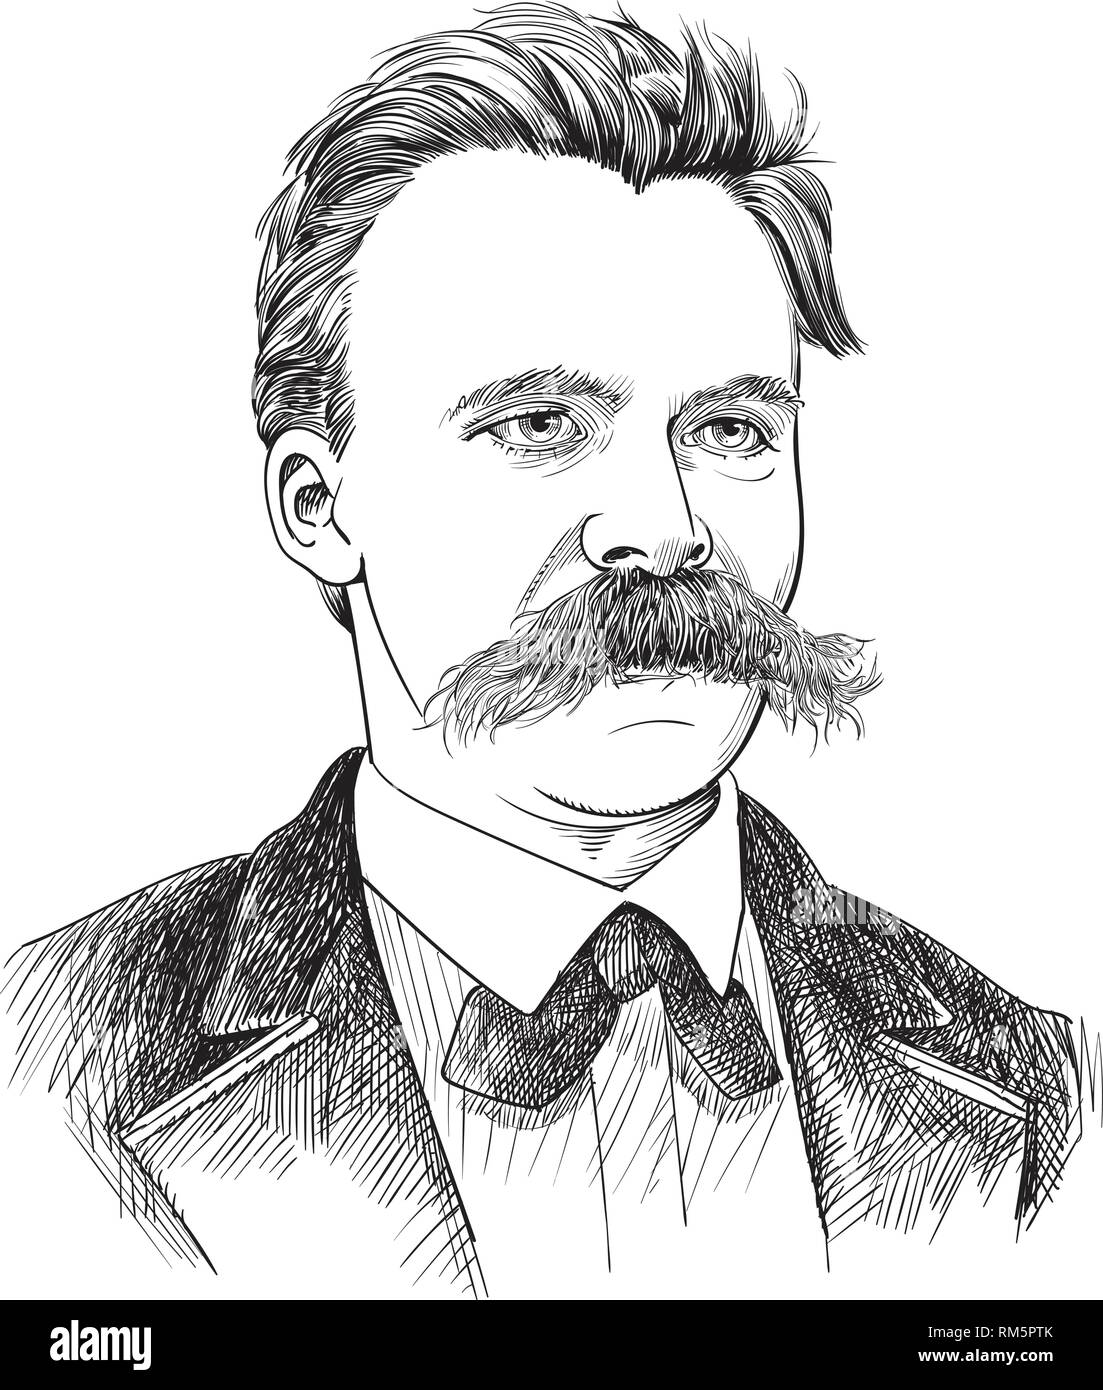 Friedrich Nietzsche portrait in line art illustration. He was German philosopher, philologist, poet, composer and classical scholar. Editable layers. Stock Vector